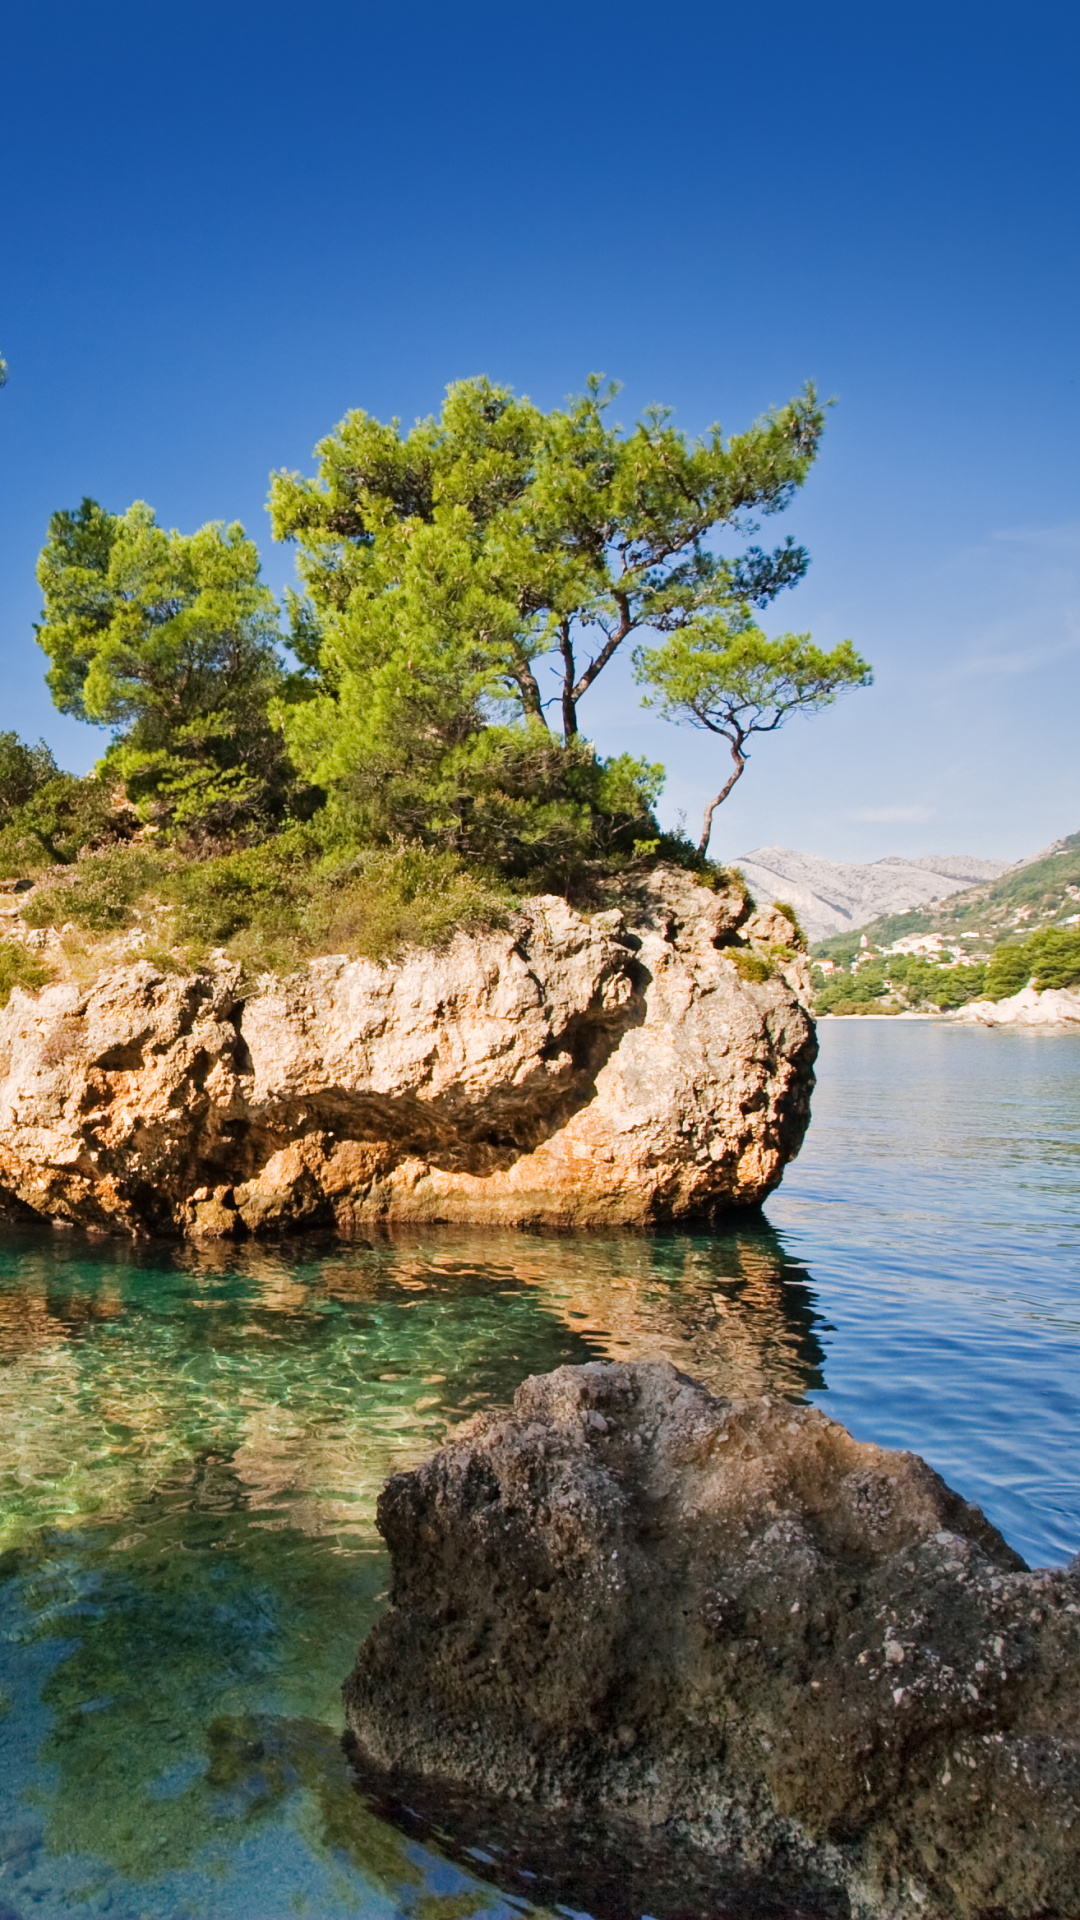 Croatia: Earth Island, The Croatian coast in the Adriatic Sea. 1080x1920 Full HD Wallpaper.